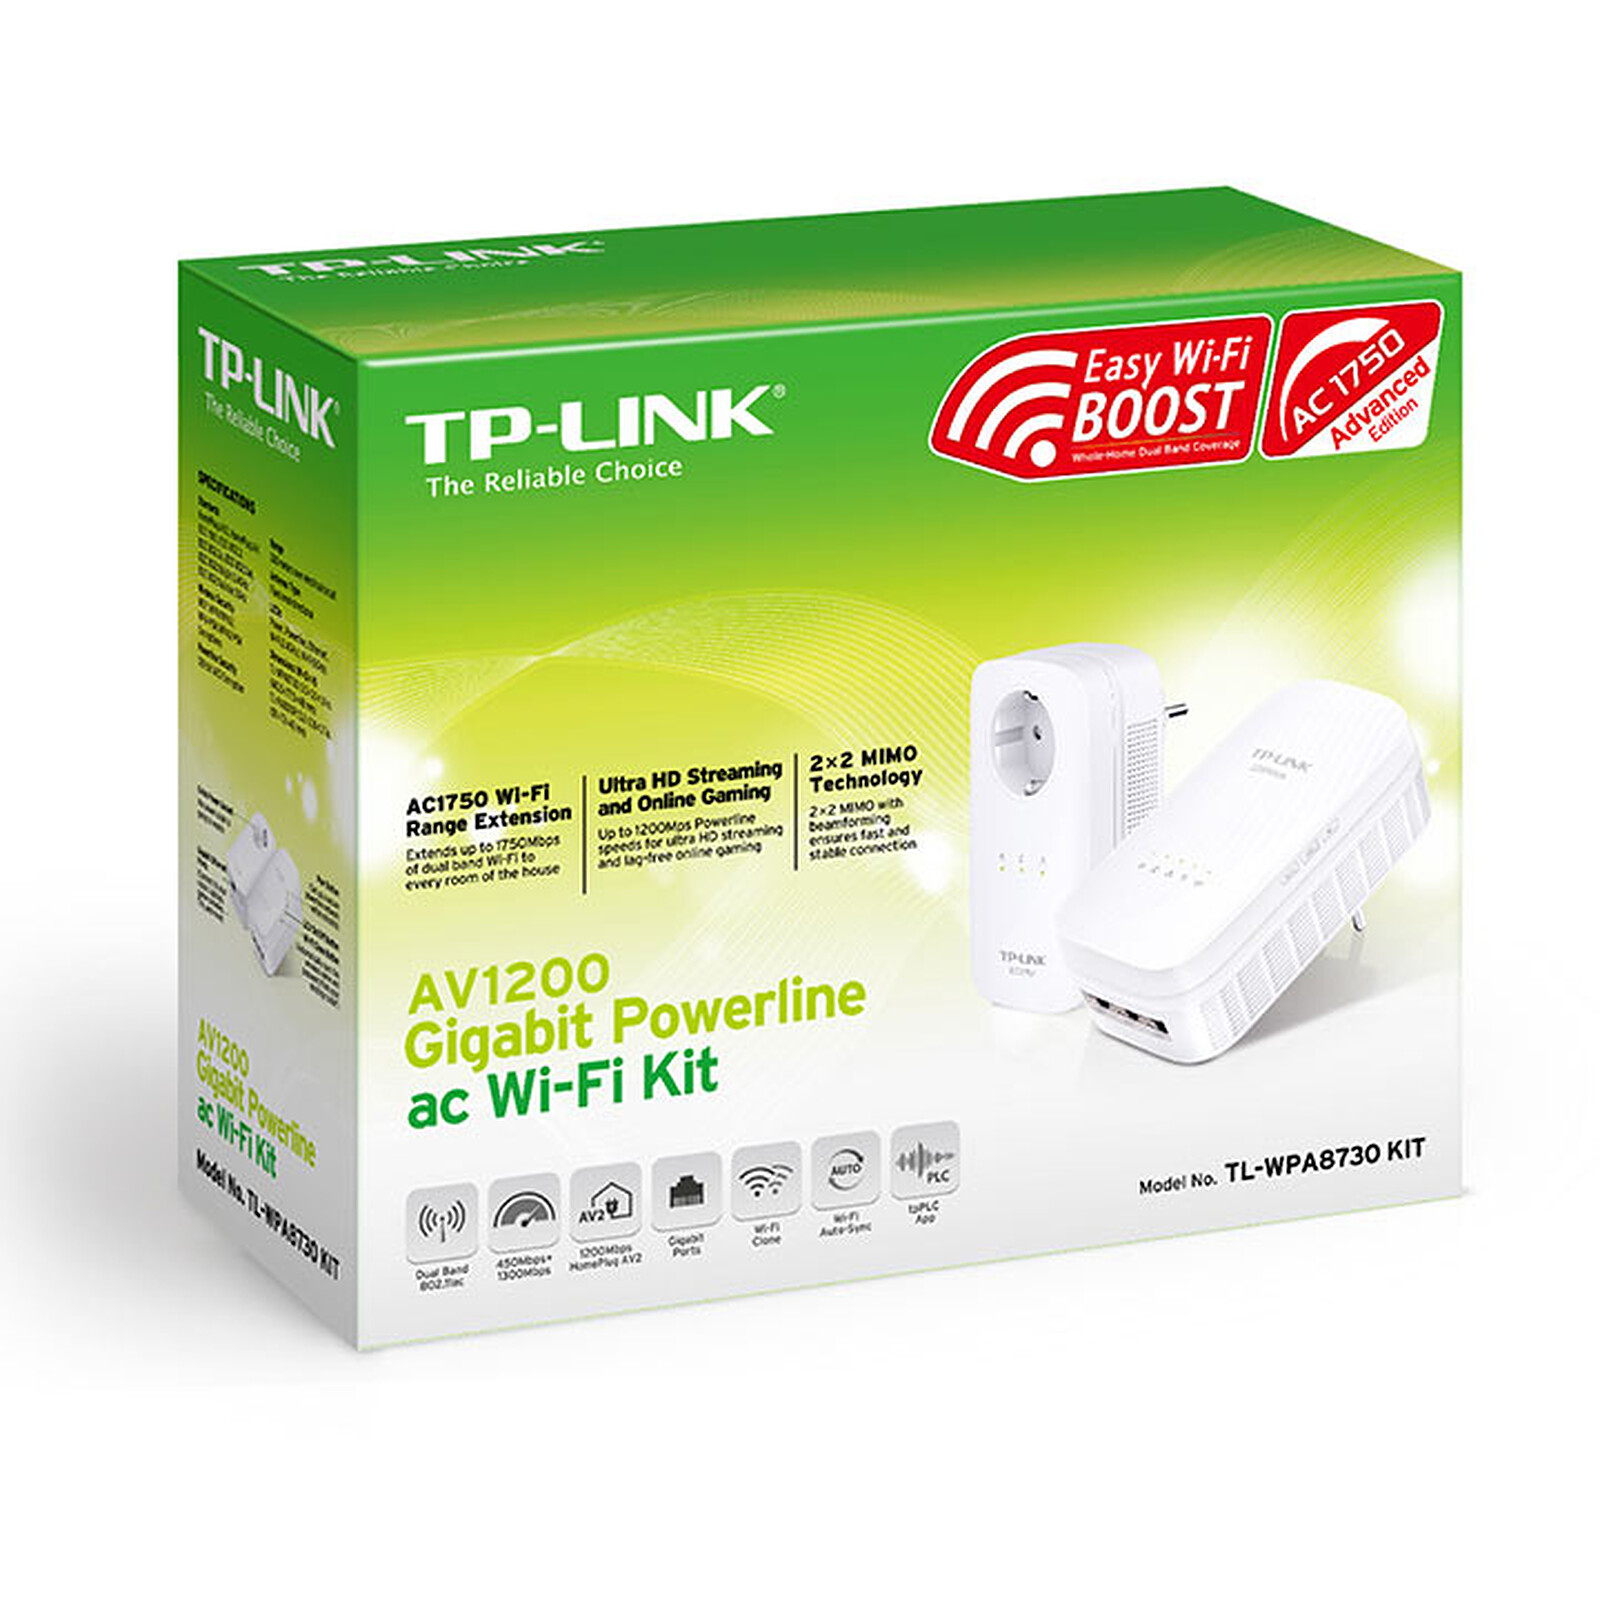 TP-LINK TL-WPA8630P - Prix Cameroun en fcfa - Adaptateur CPL Wifi